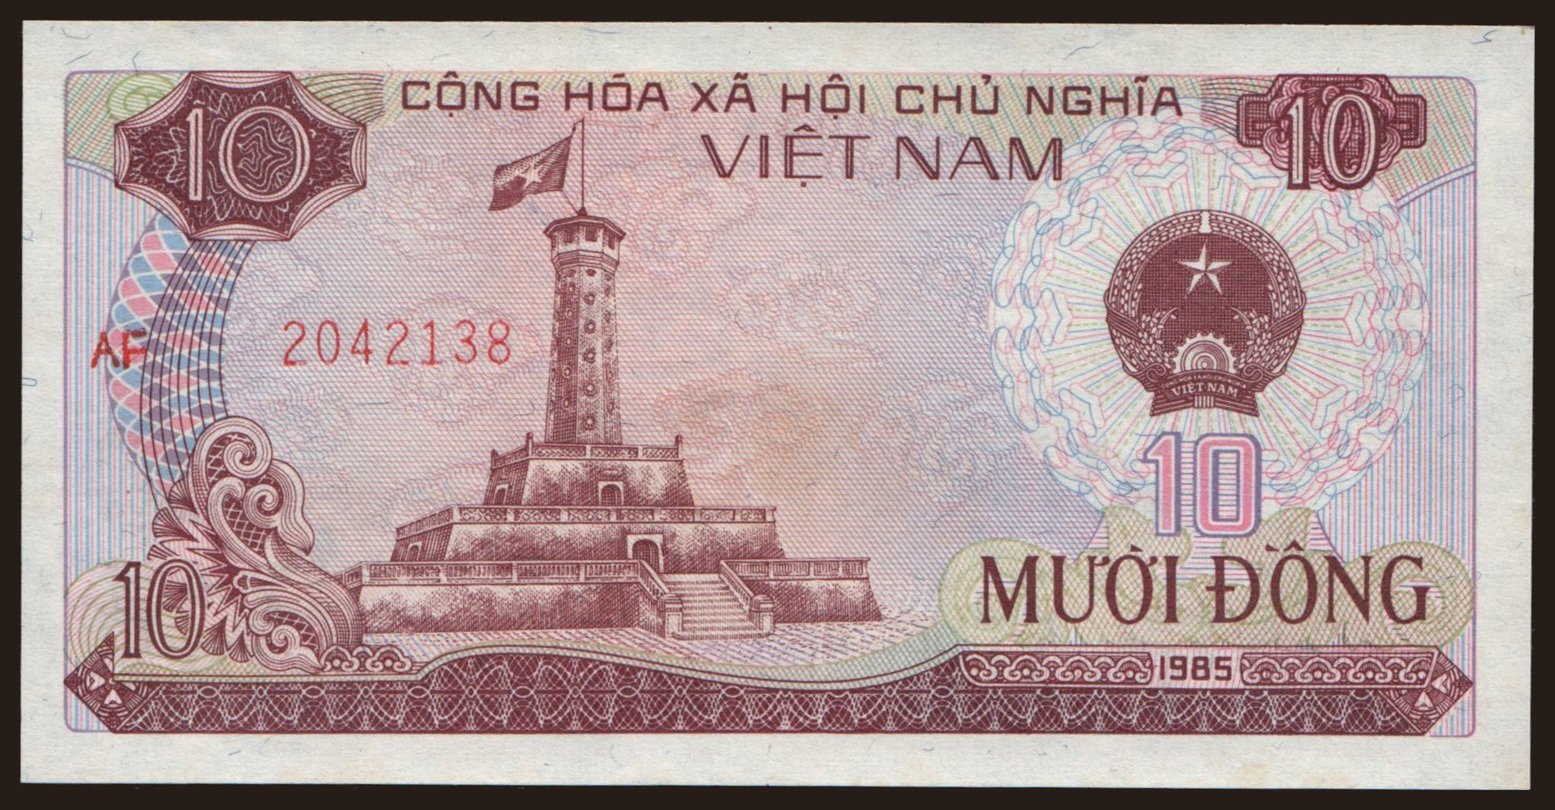 10 dong, 1985